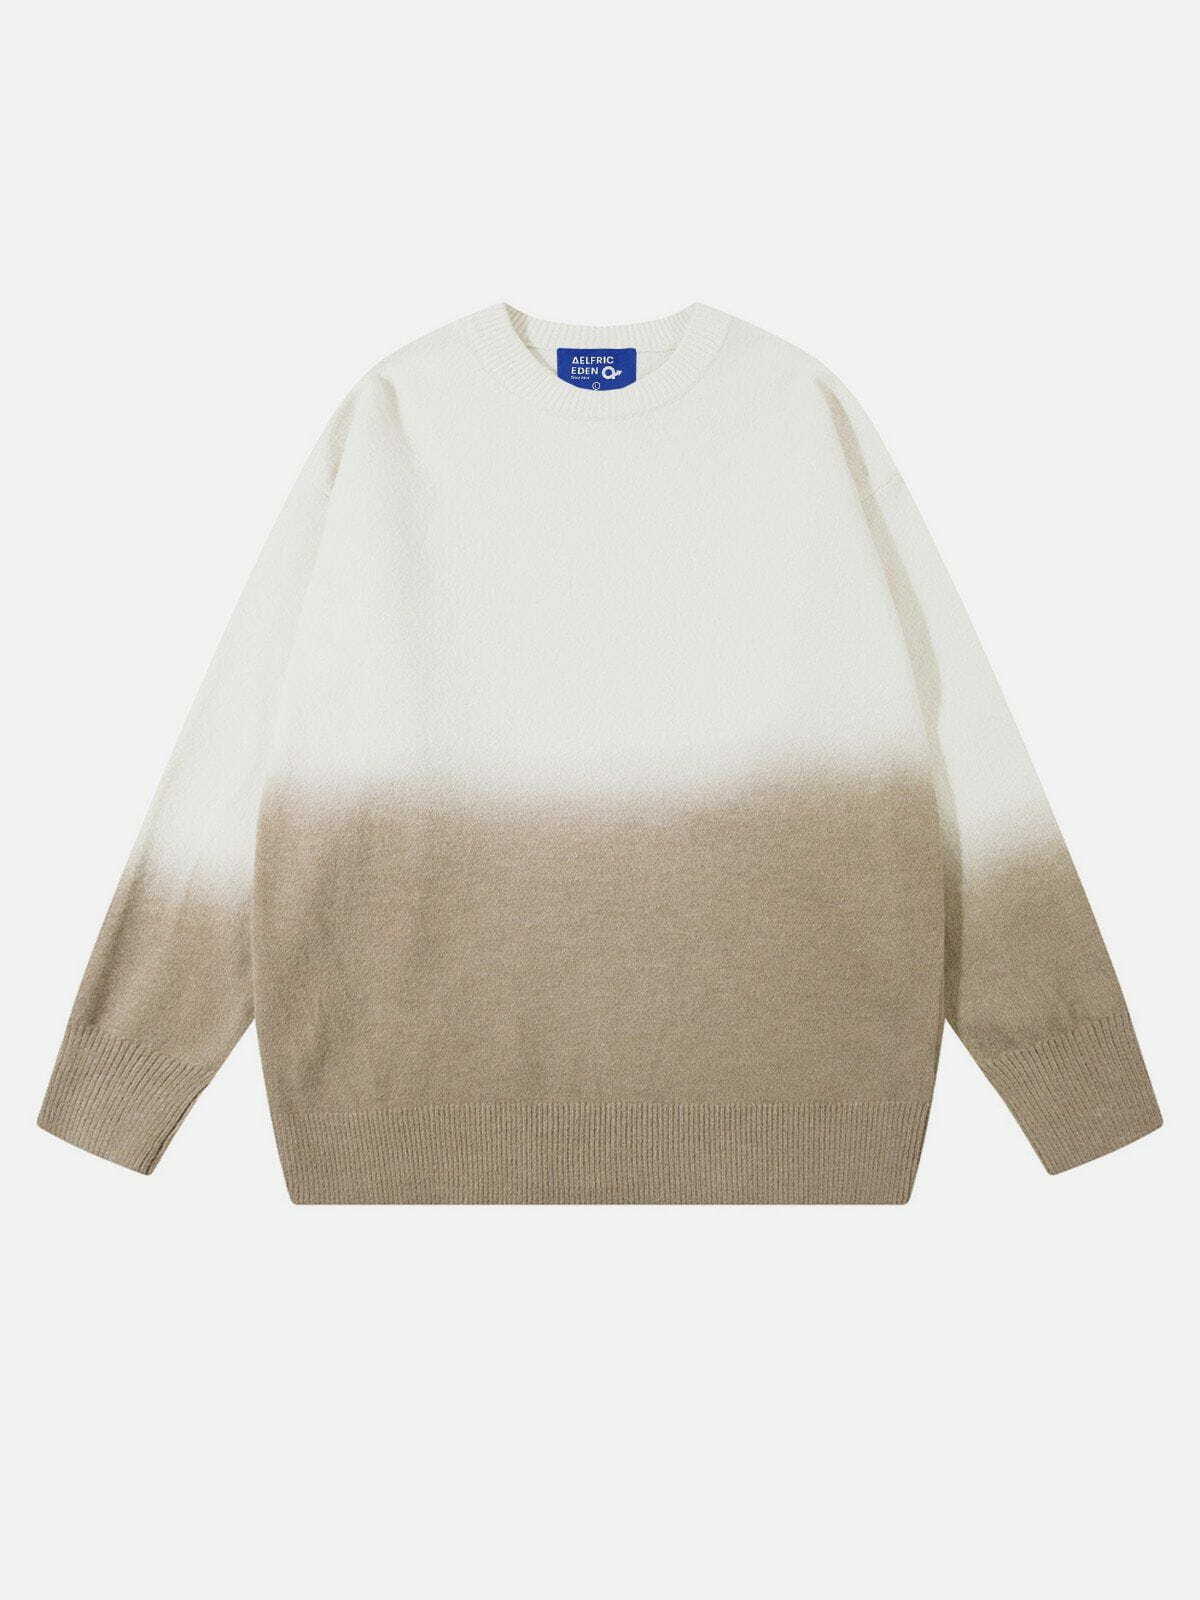 vibrant gradient sweater urban fashion trend 4098